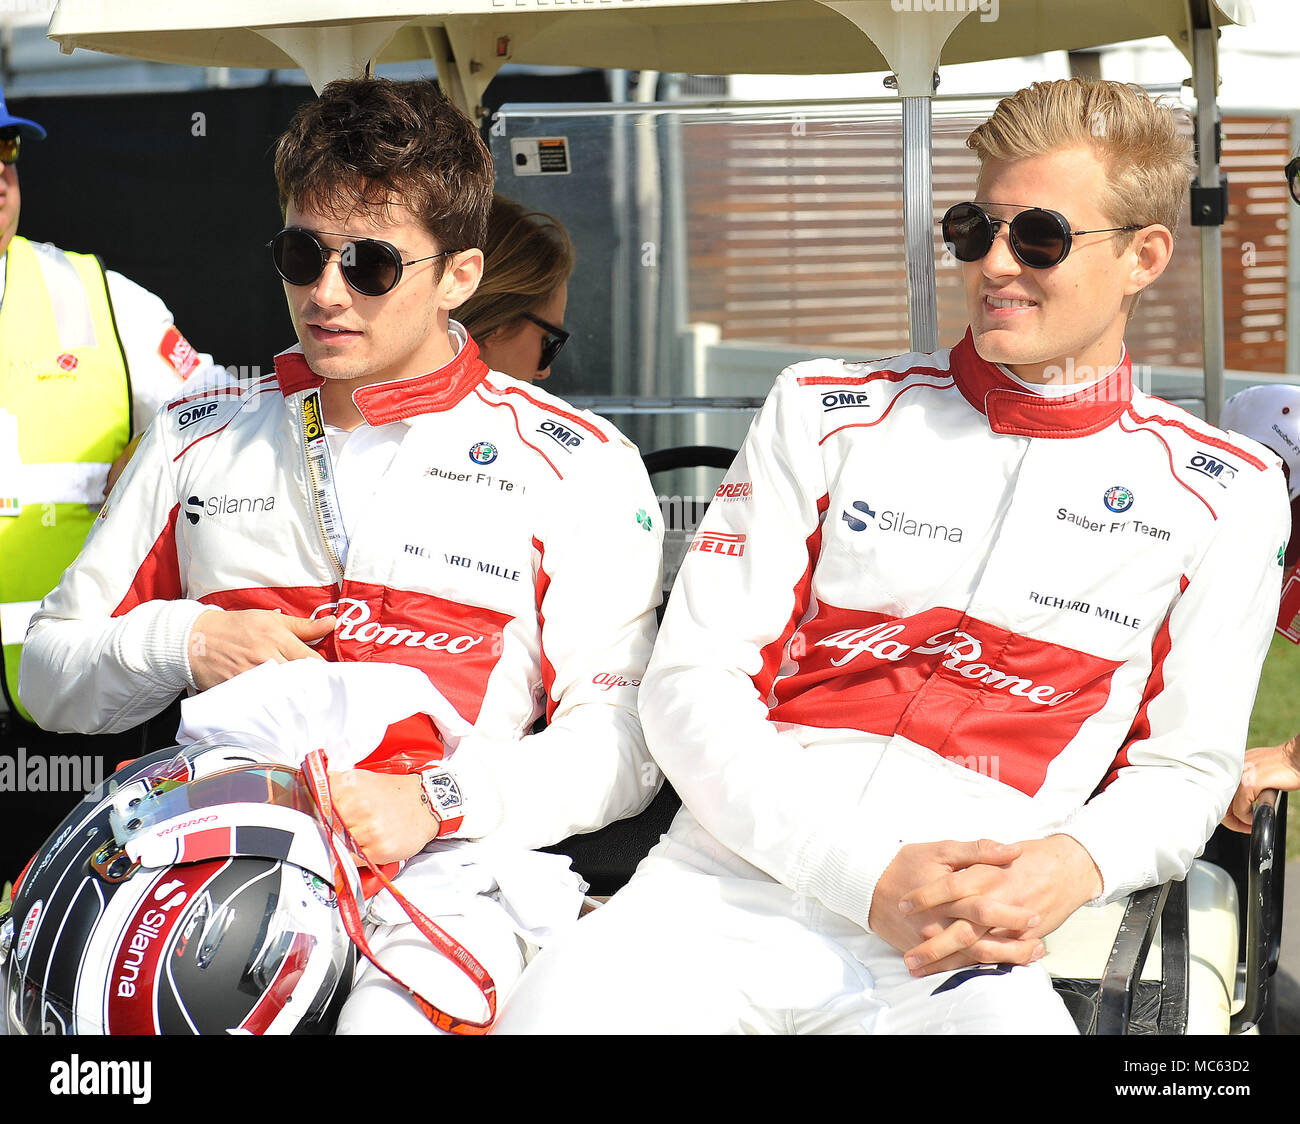 Charles Leclerc de Alfa Romeo Sauber F1 Team et Marcus Ericsson d'Alfa  Romeo Sauber F1 Team. Jour 1 de la Formule 1 2018 Rolex Grand Prix  d'Australie qui a eu lieu sur